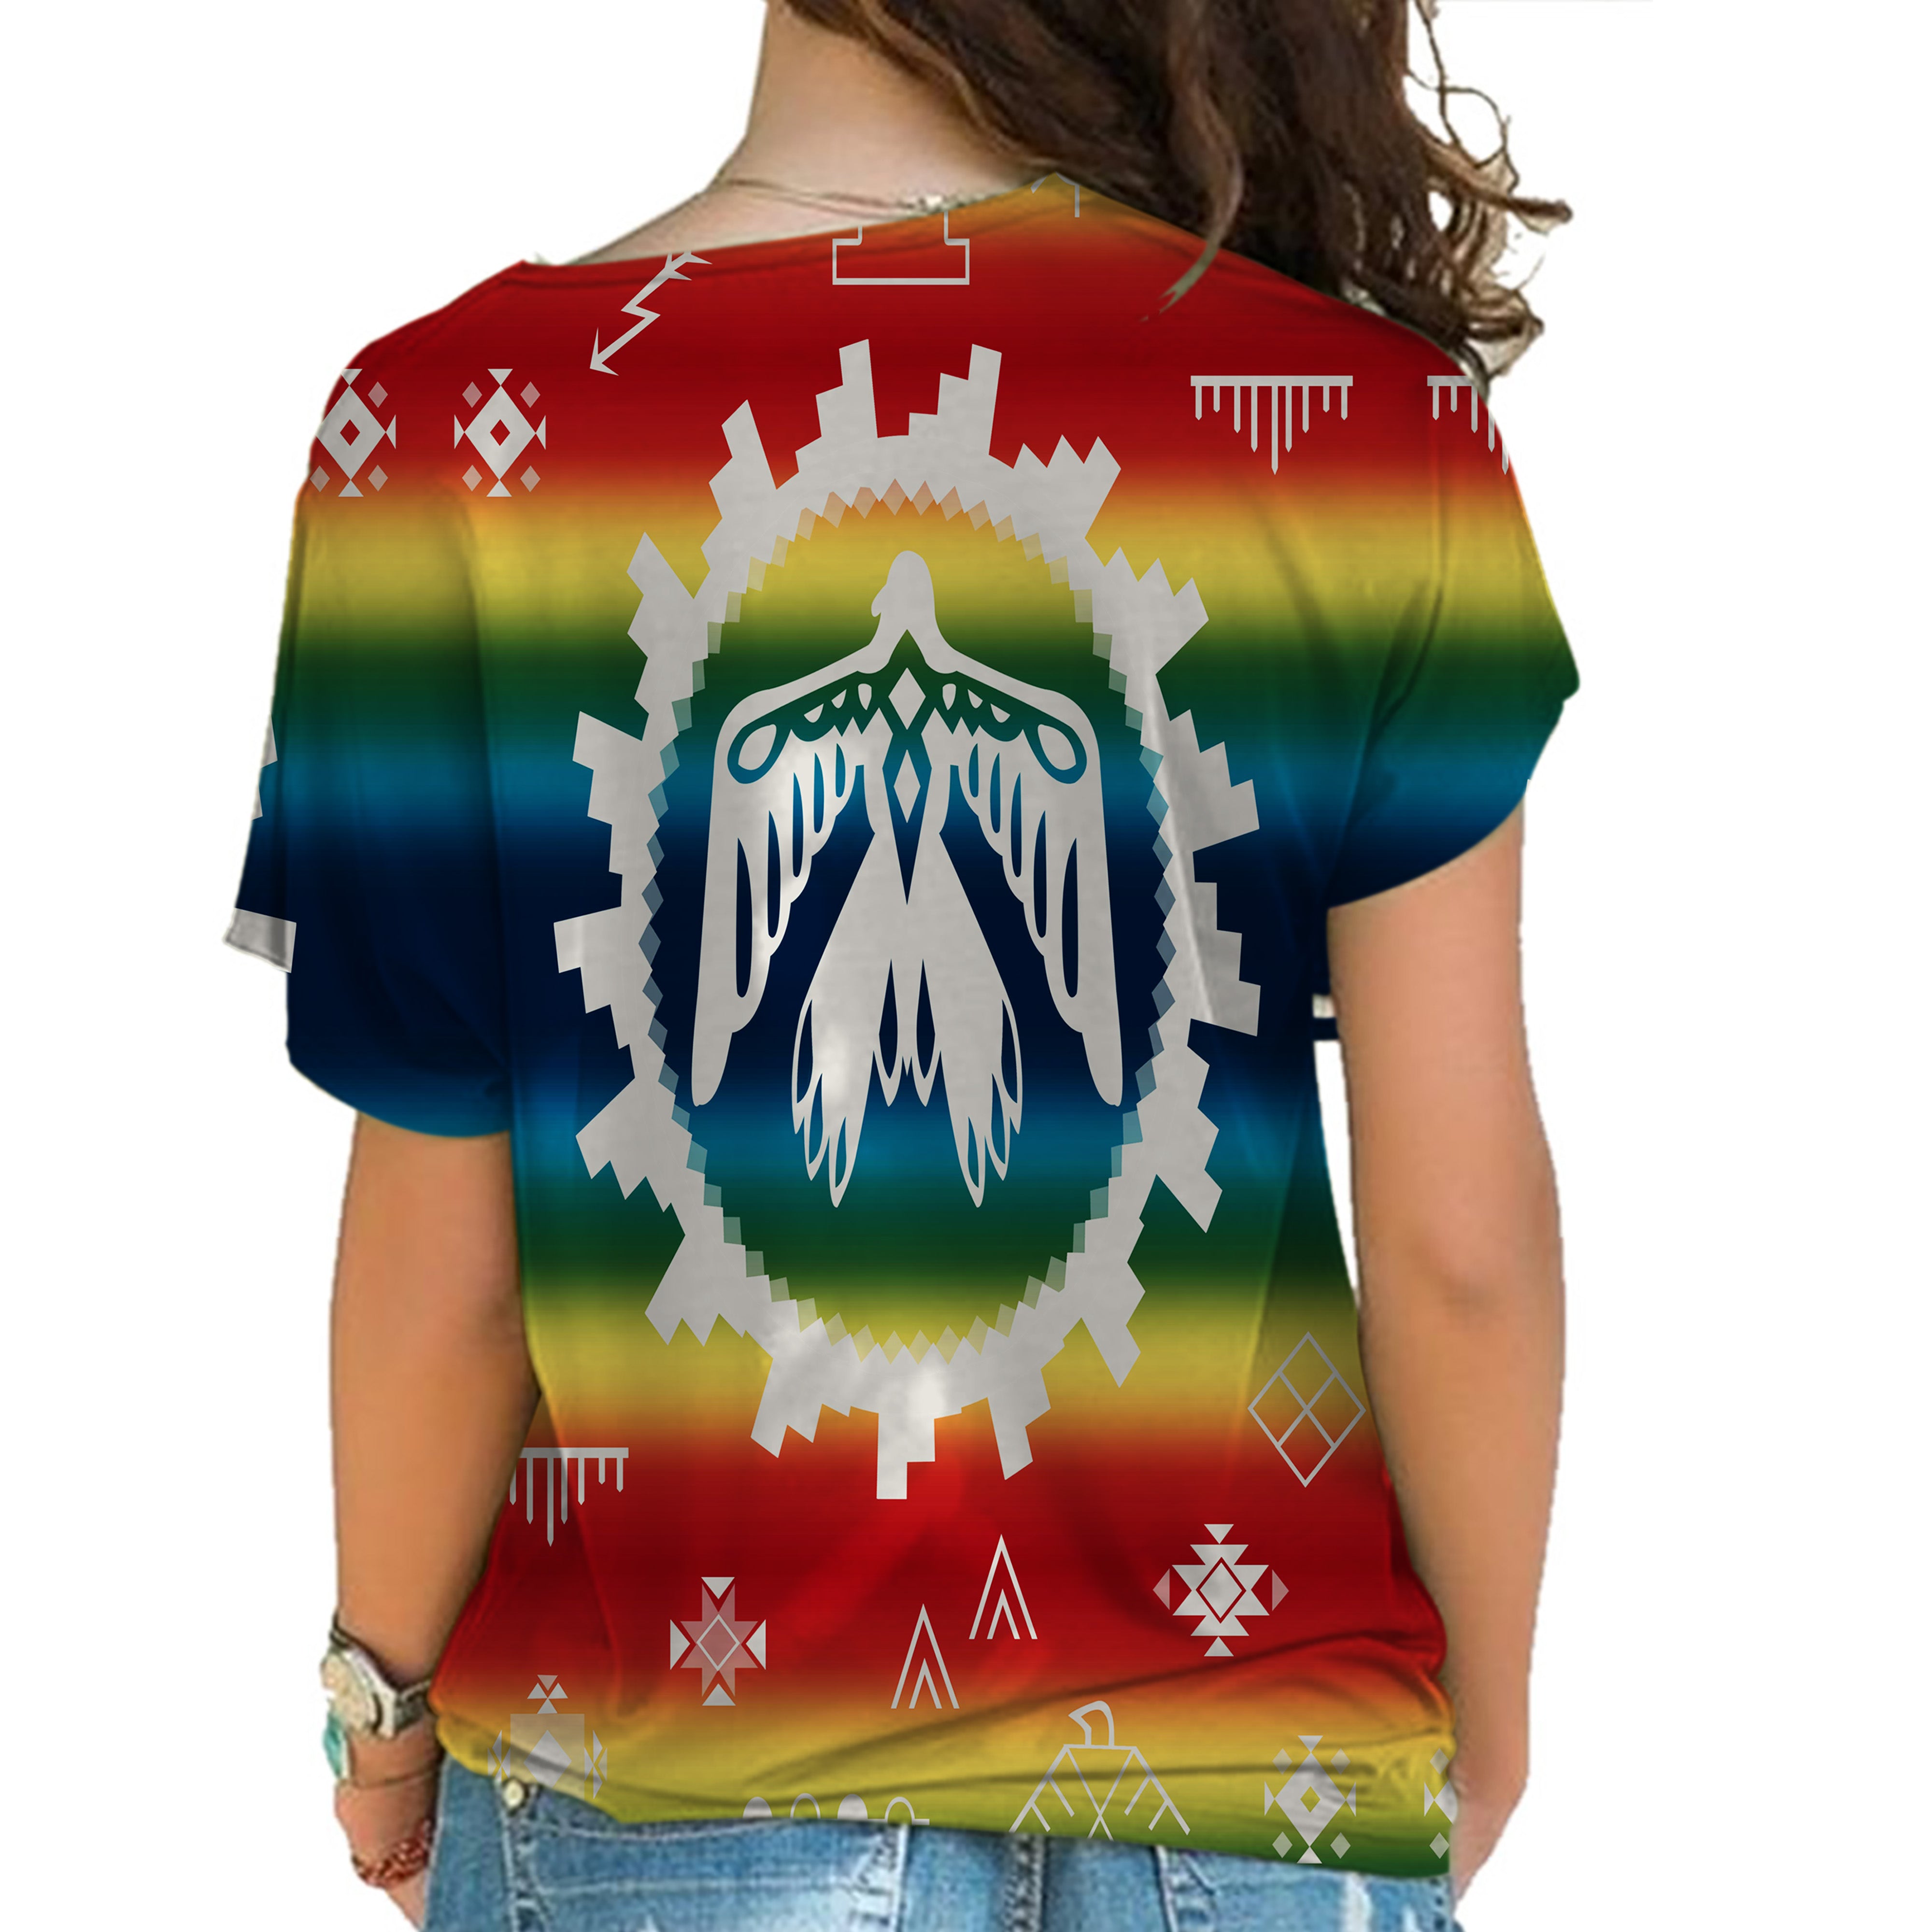 Powwow Store native american cross shoulder shirt 1